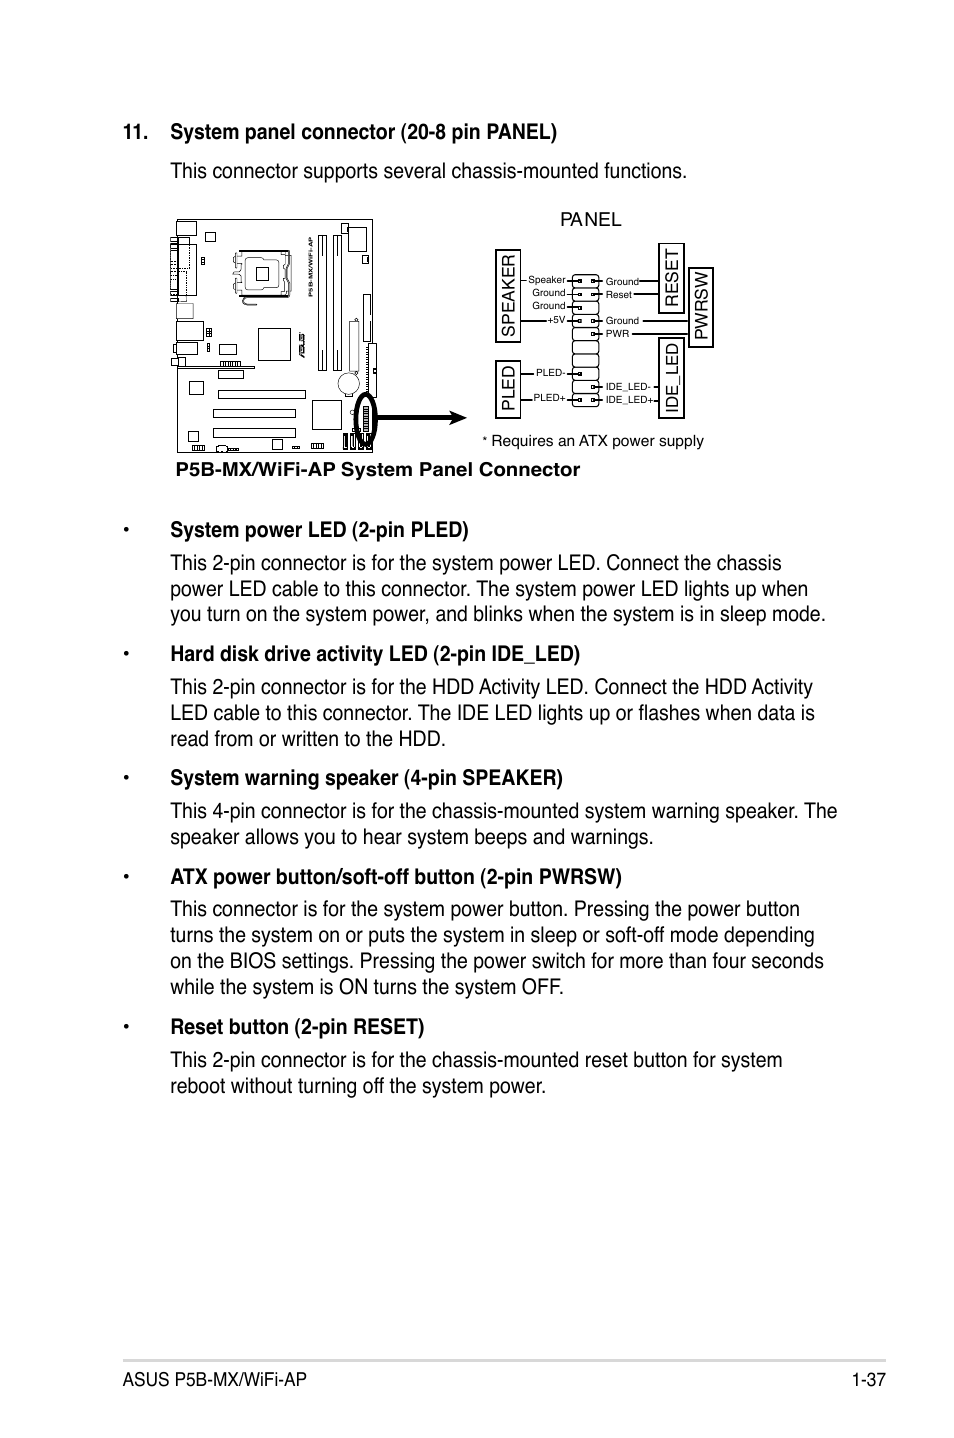 Asus p5b-mx/wifi-ap 1-37, P5b-mx/wifi-ap system panel connector ...